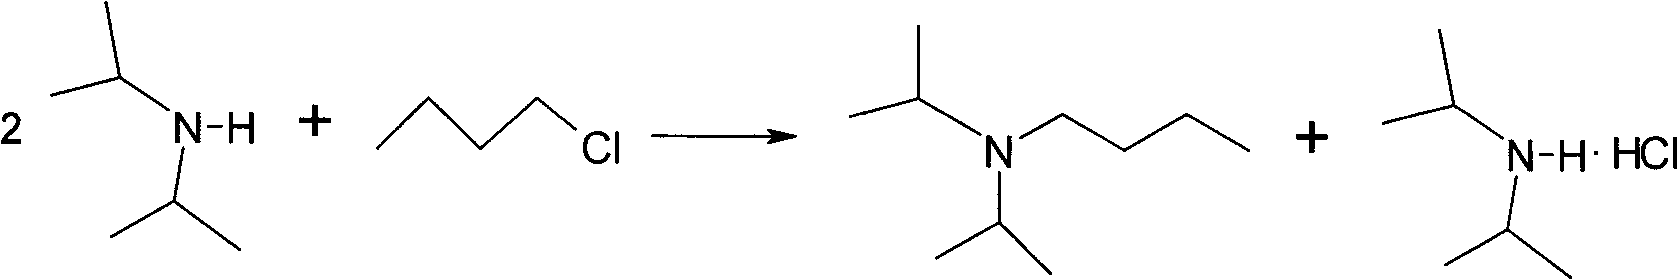 Synthesizing method of N,N-diisopropyl butylamine